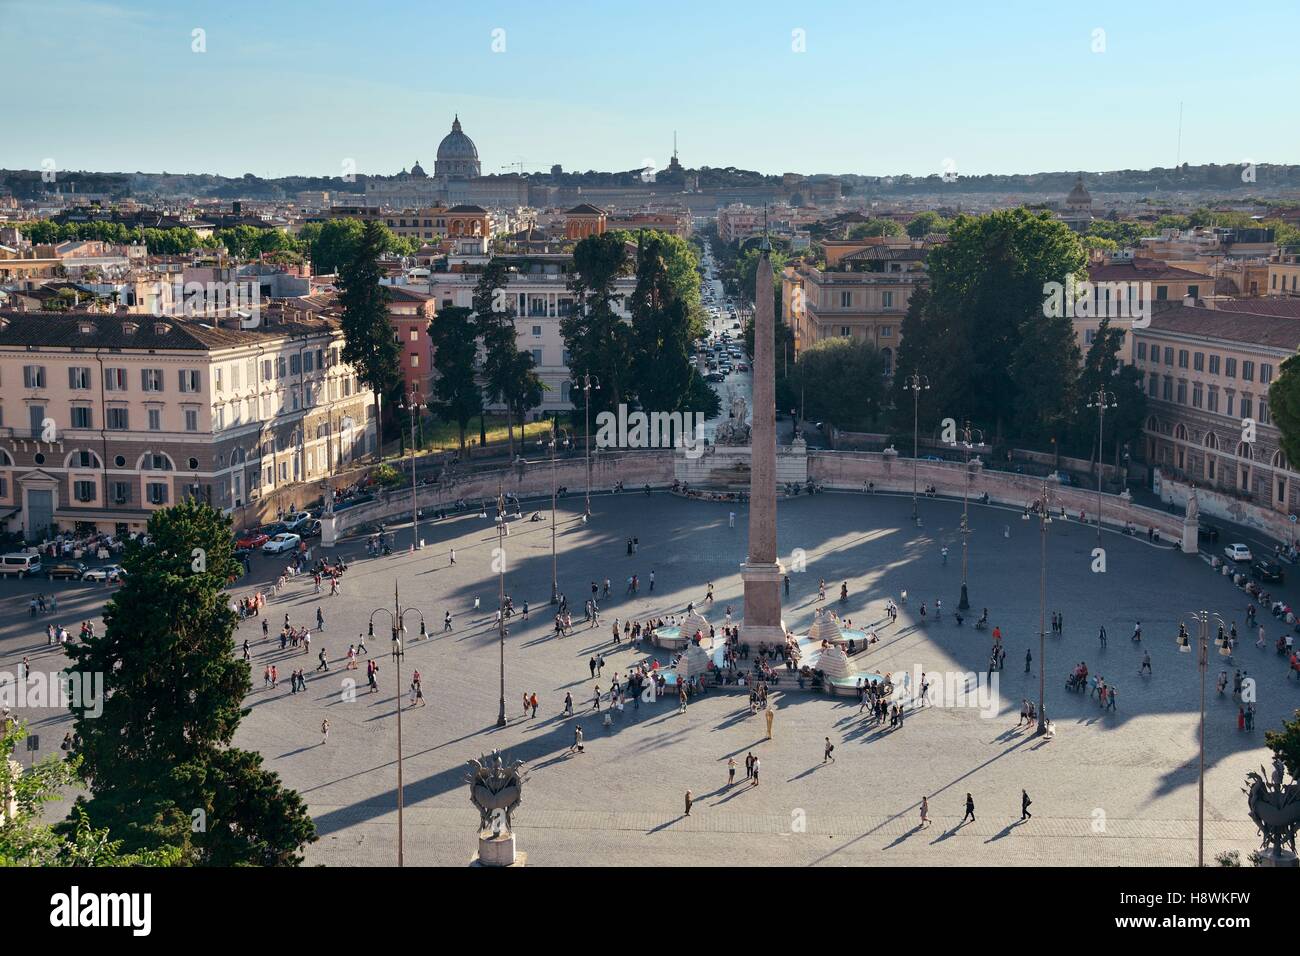 Piazza del Popolo in day time in Rome, Italy. Stock Photo